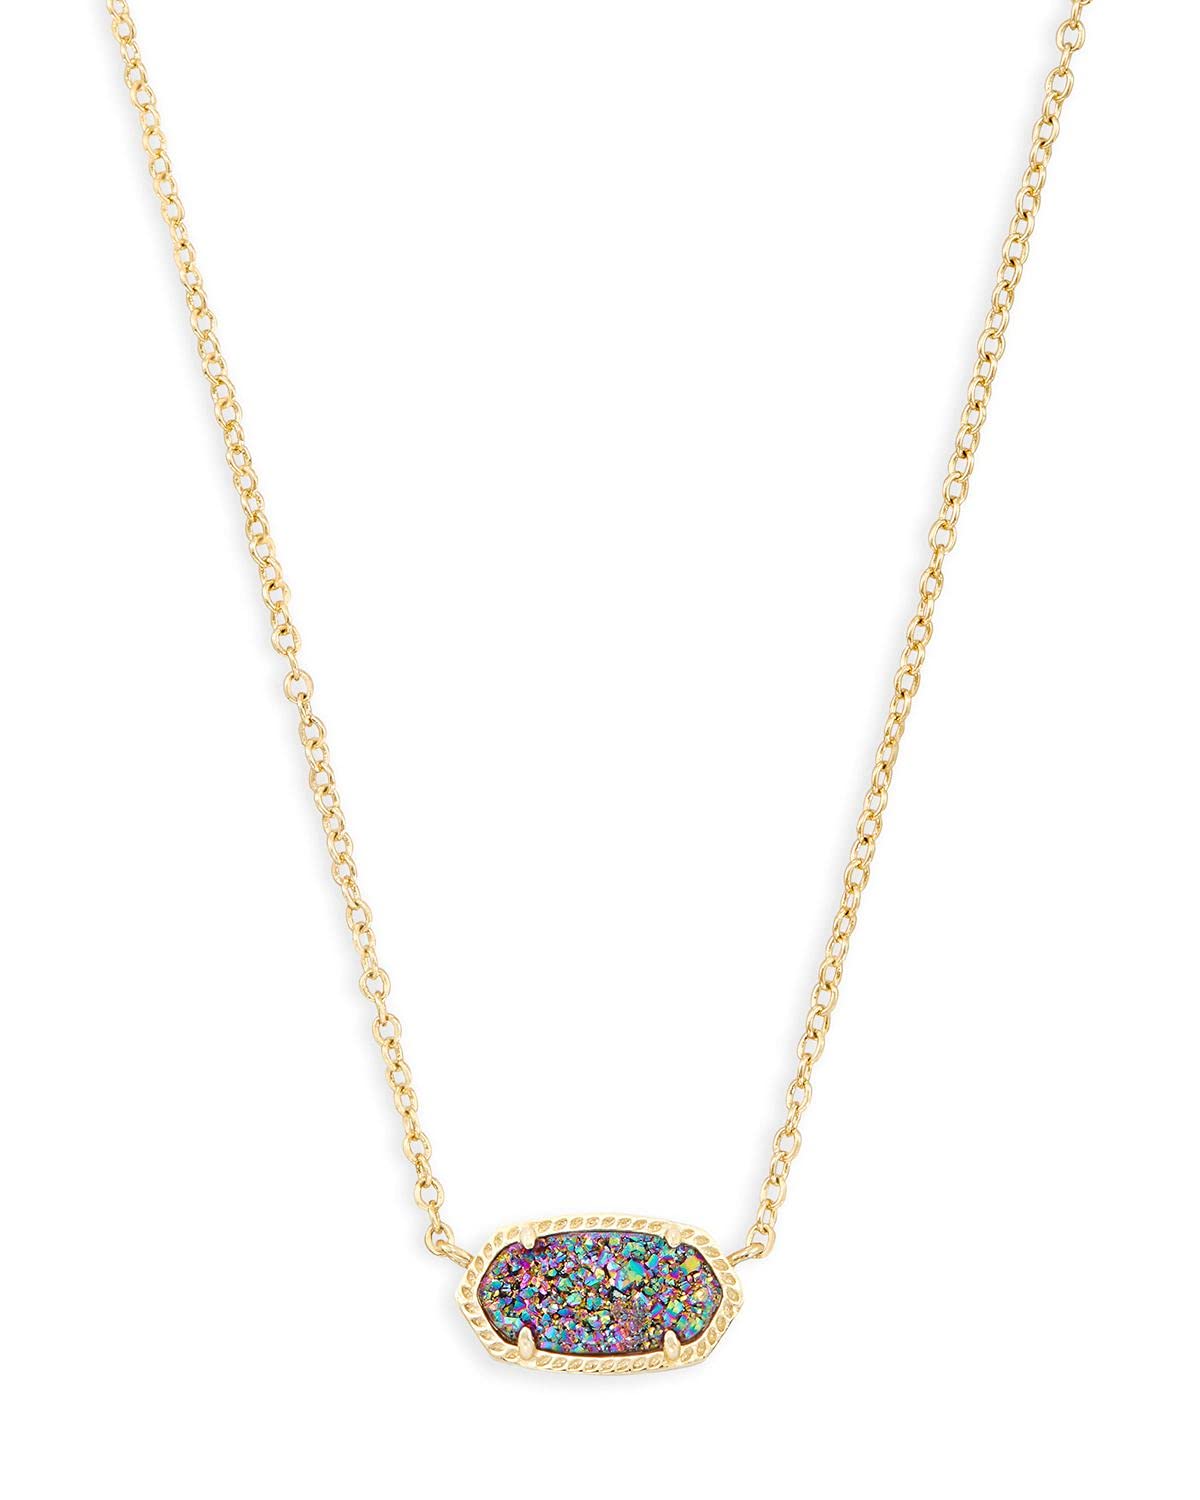 Kendra Scott Elisa Pendant Necklace for Women, Fashion Jewelry, 14k gold-Plated, Multi Drusy